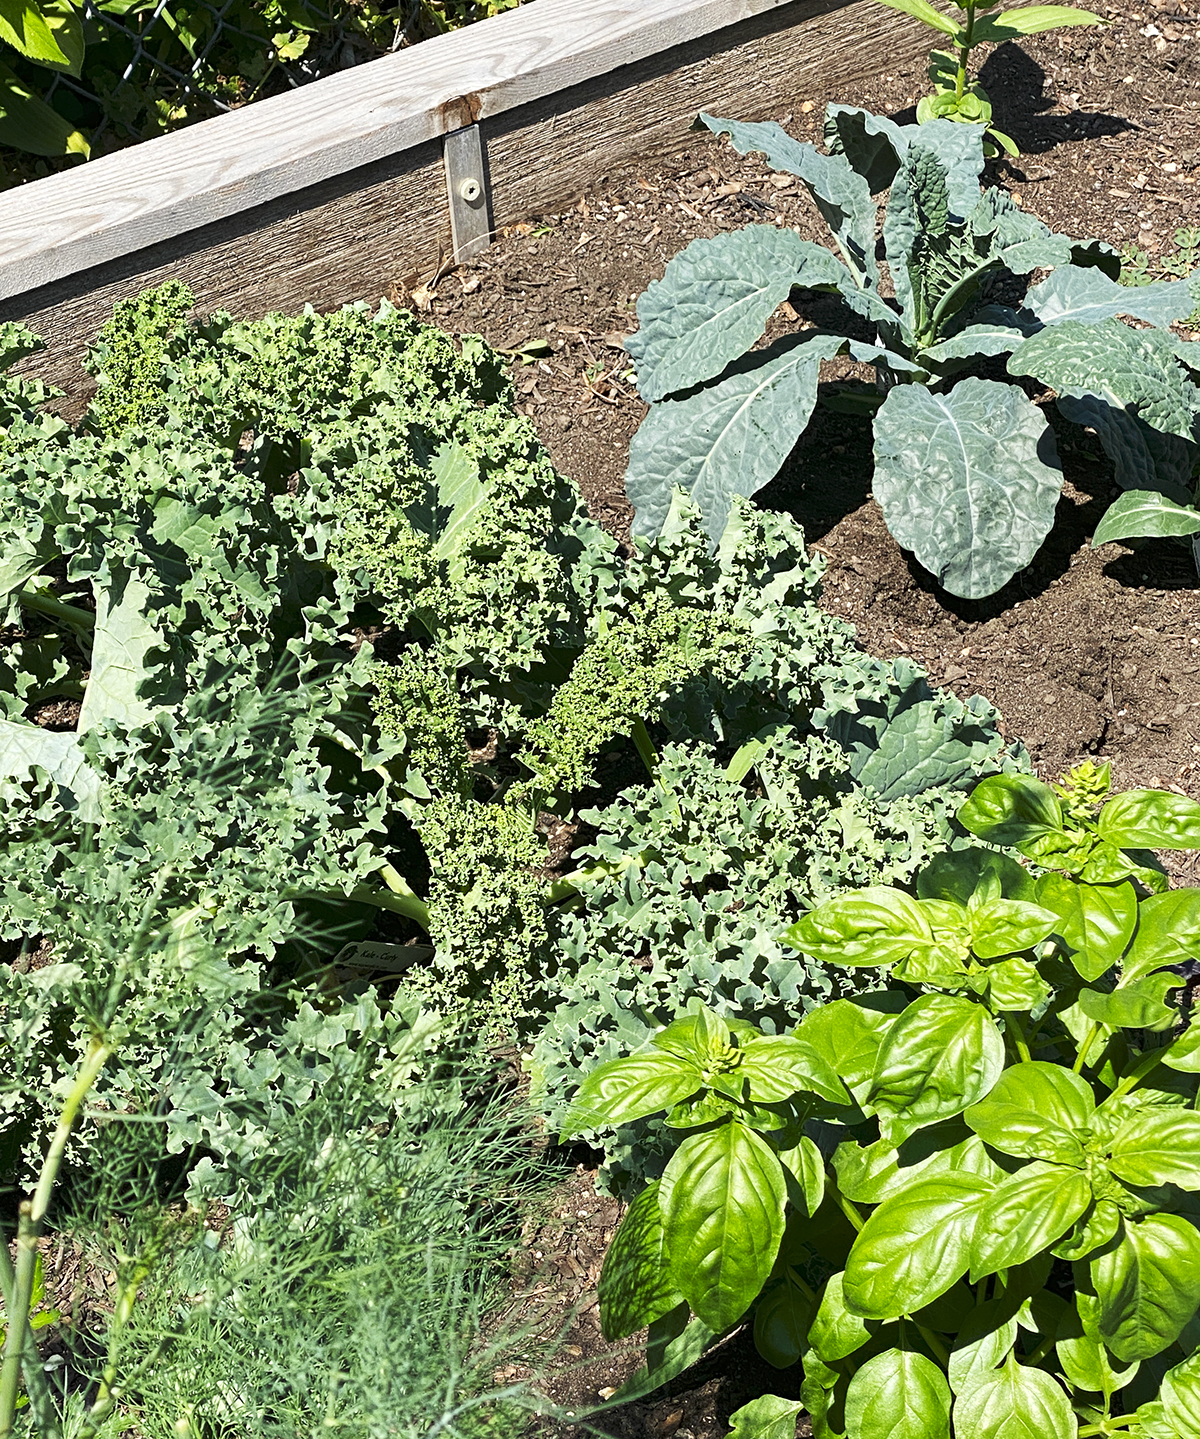 garden bed of curly kale, lacinato or dinosaur kale, basil and sun shining